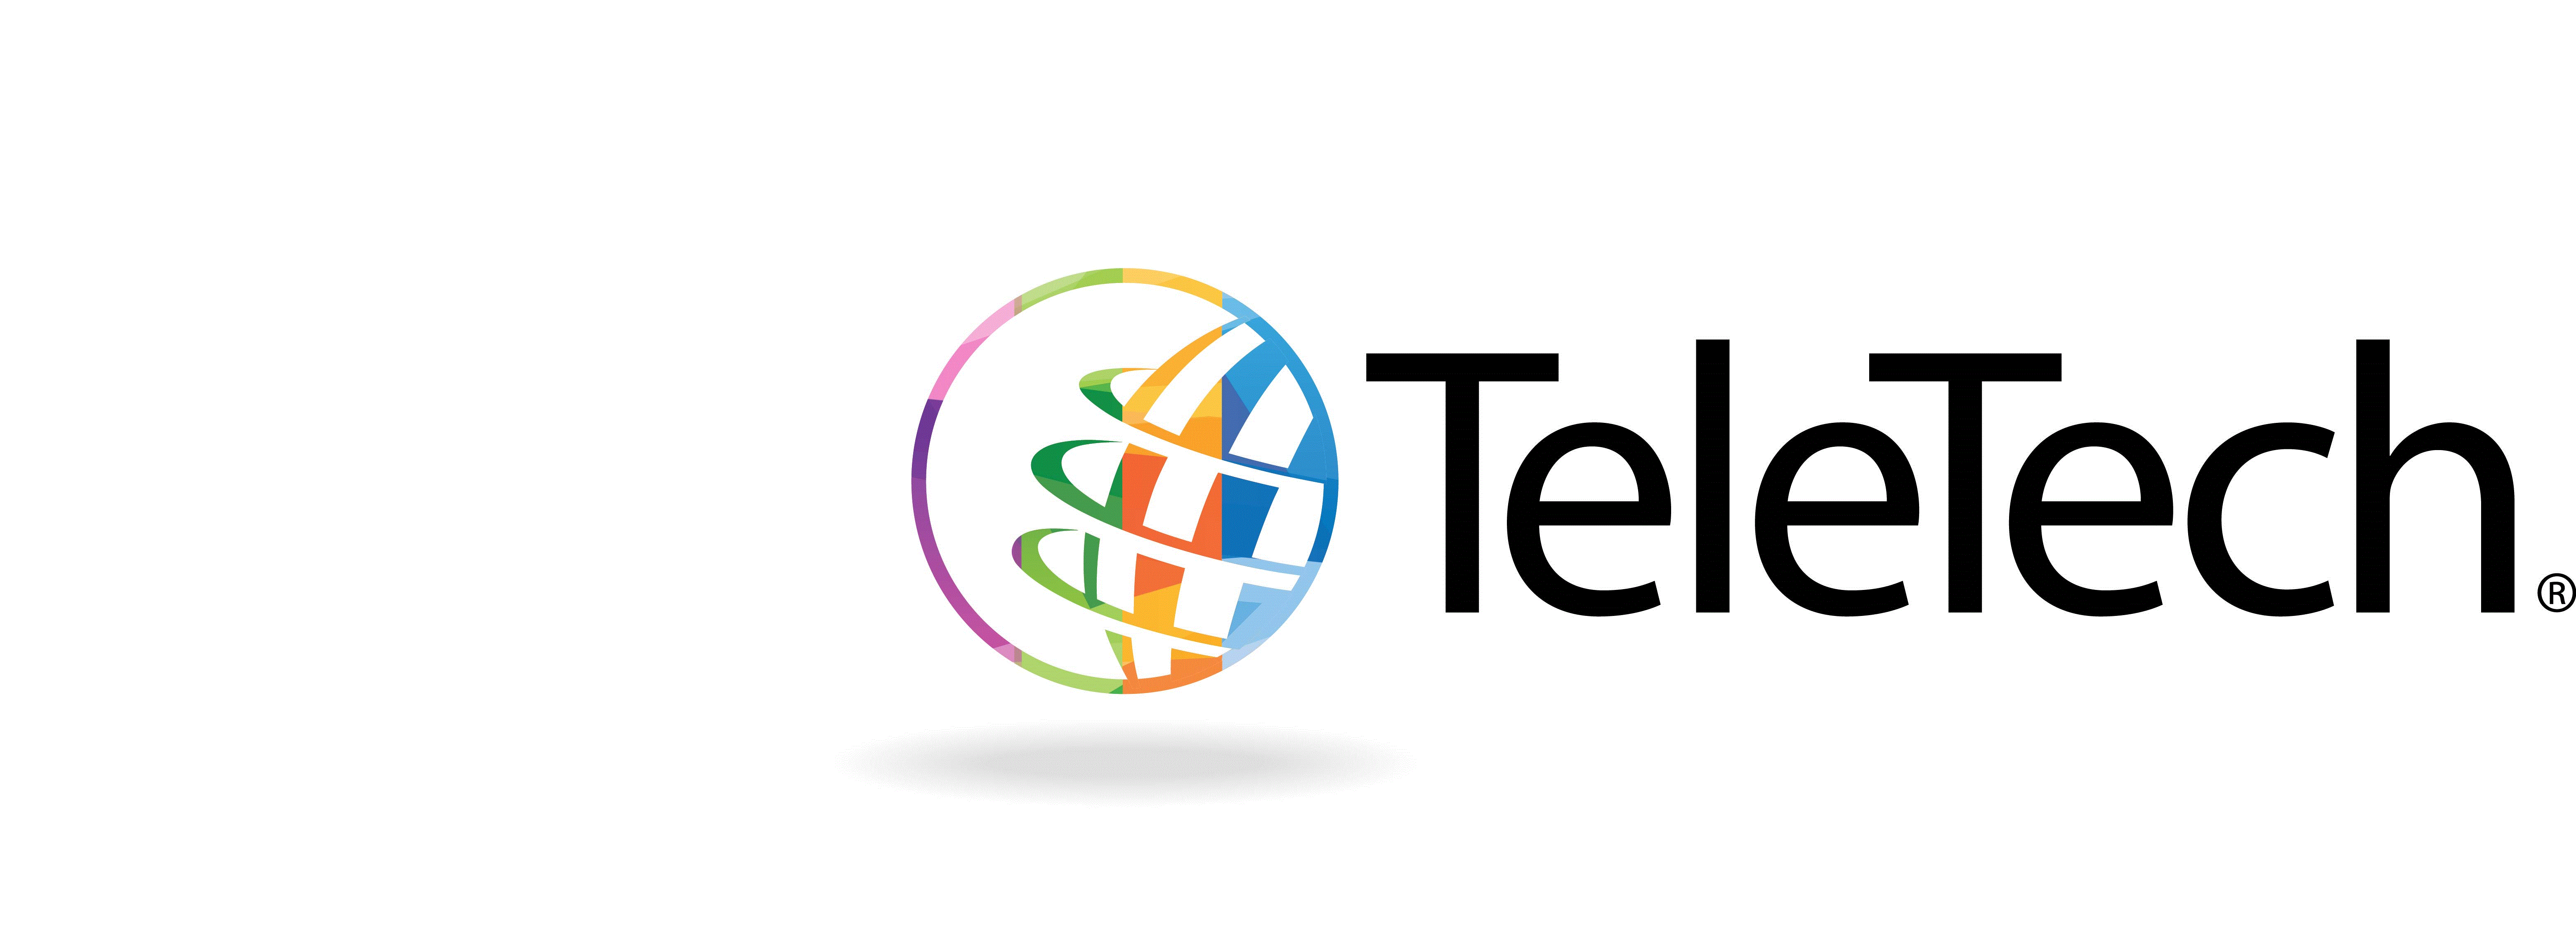 TeleTech Logo photo - 1